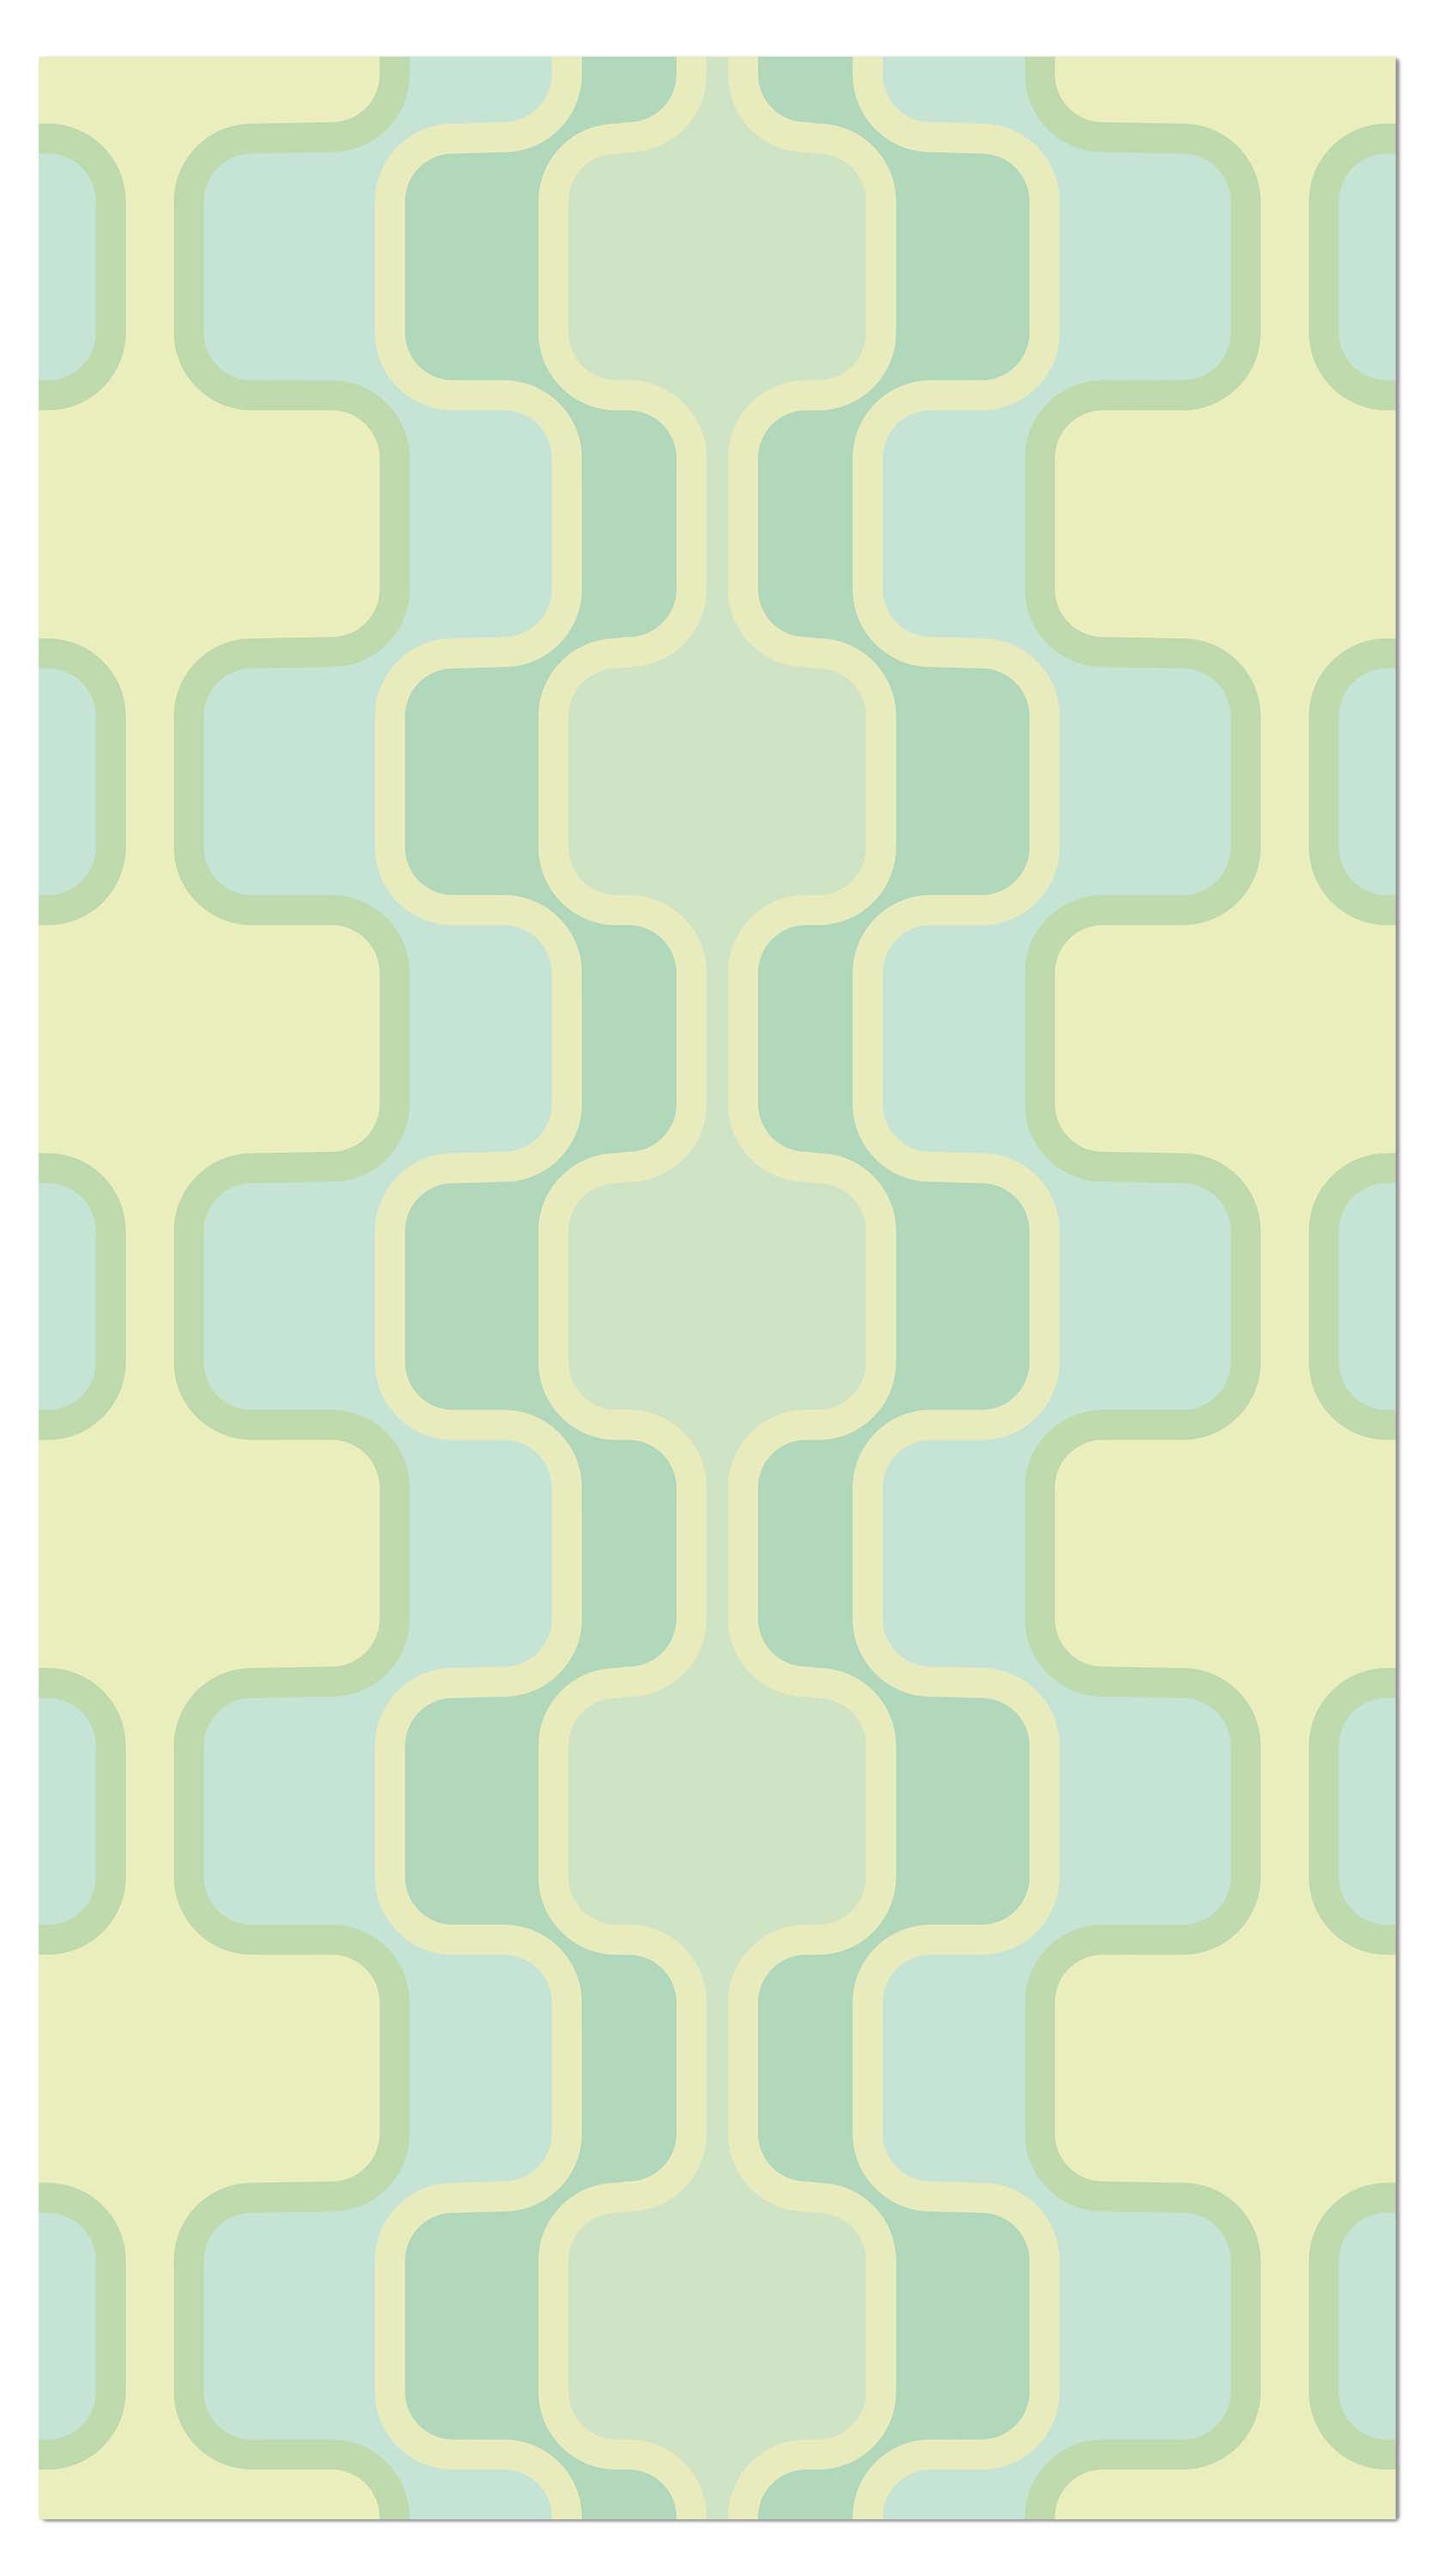 Garderobe Retromuster Pastellgrün Muster M0109 entdecken - Bild 4